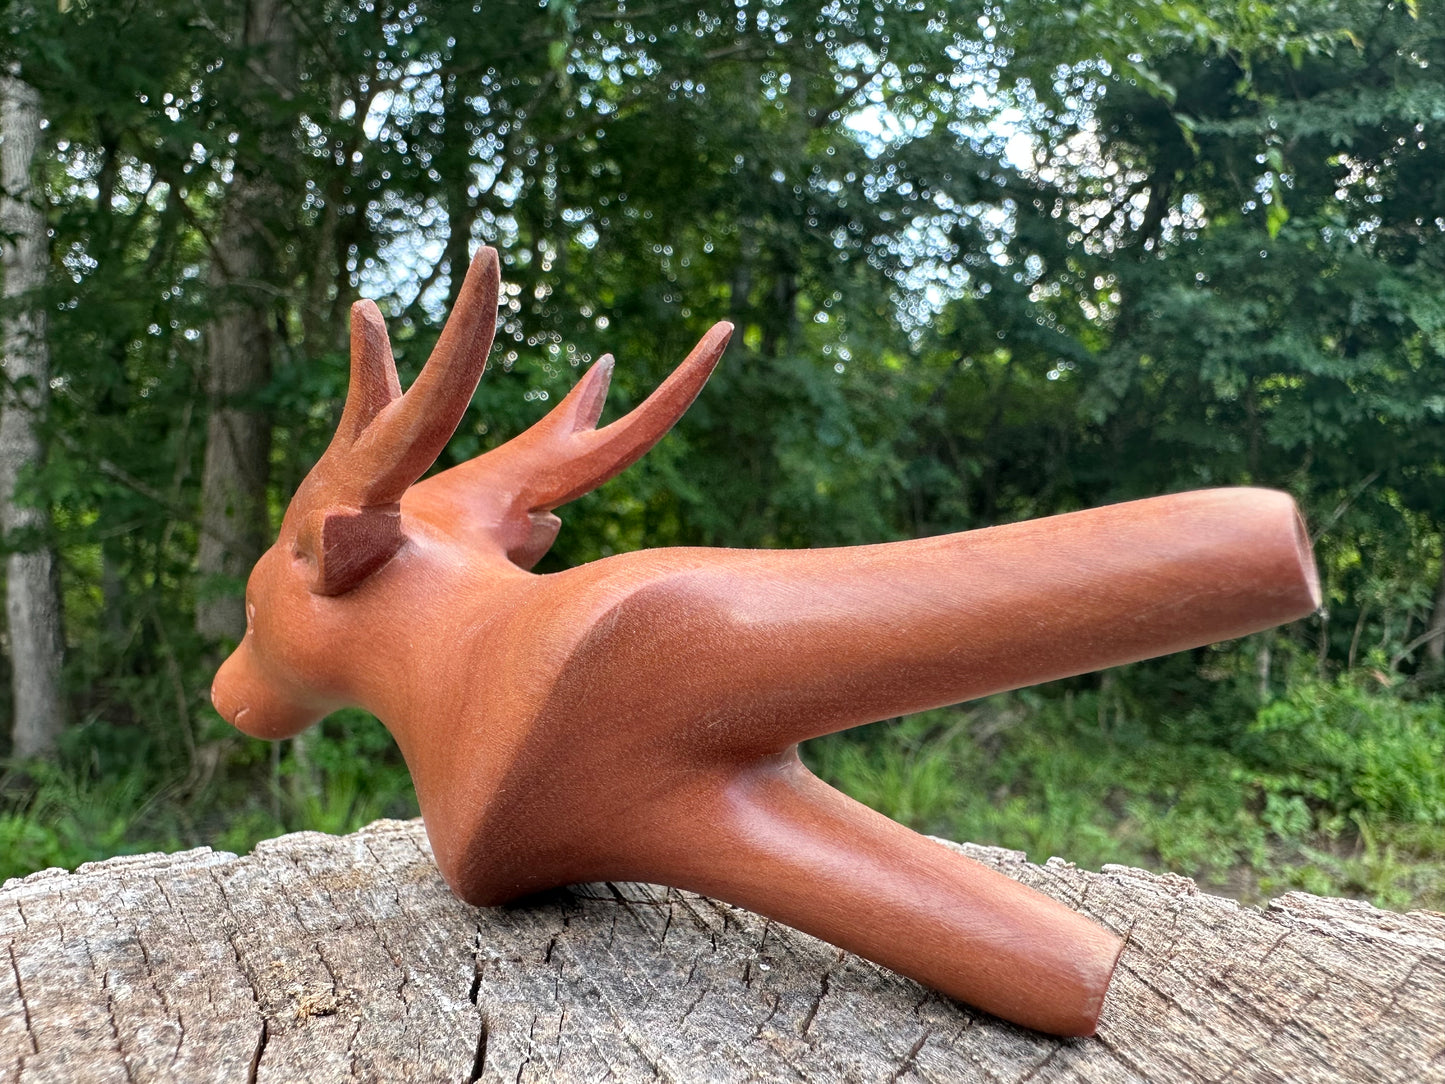 Deer kuripe